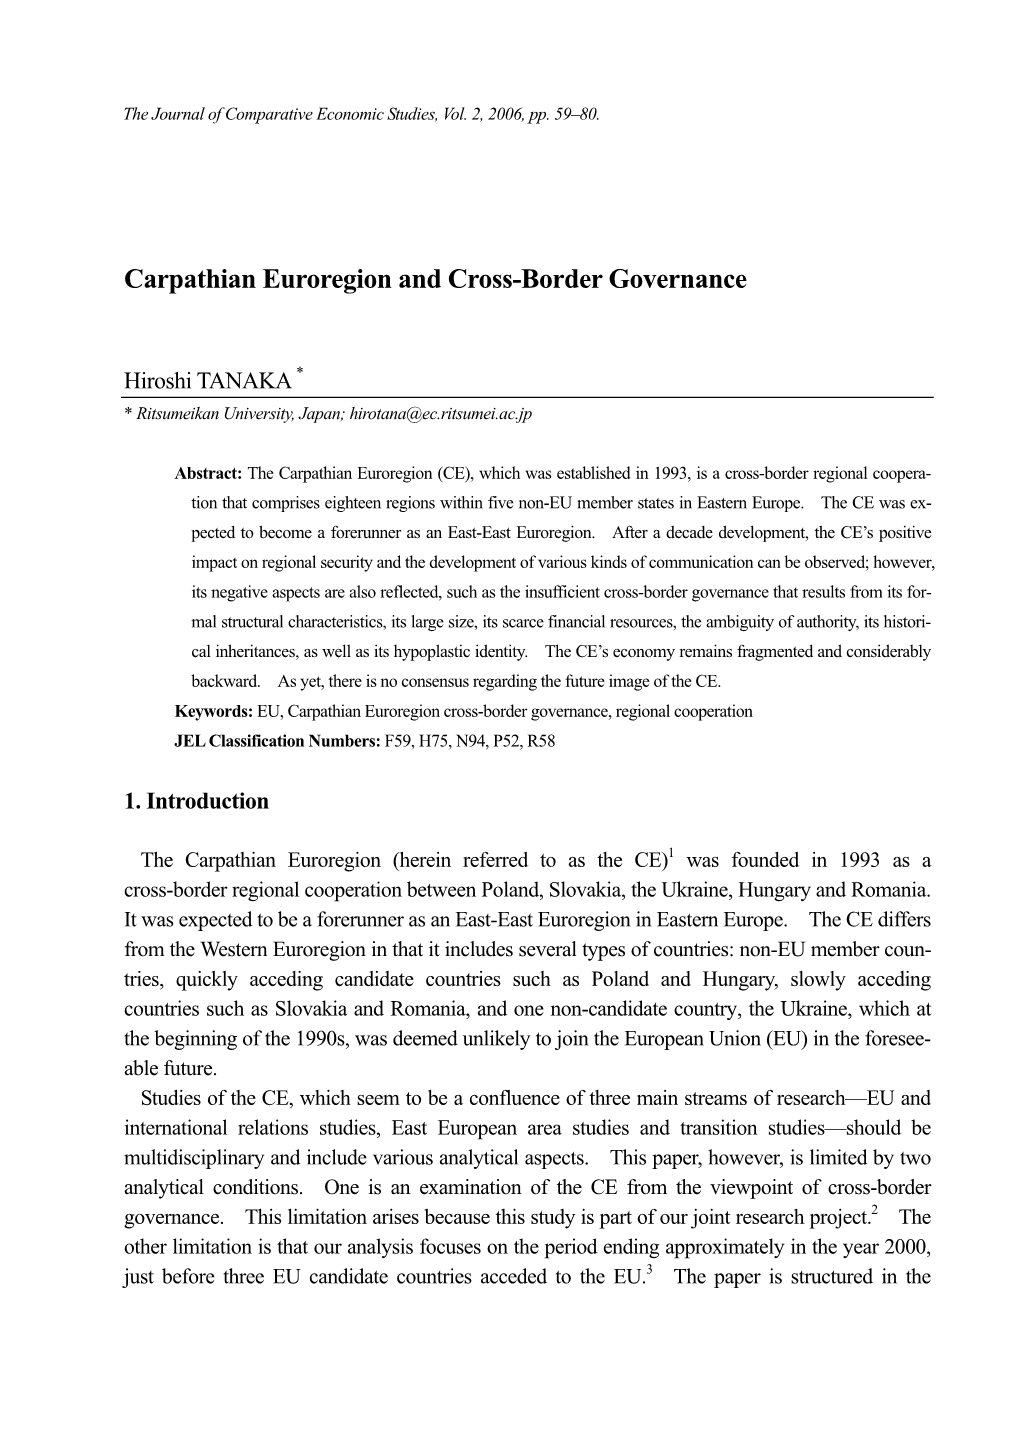 Carpathian Euroregion and Cross-Border Governance 59